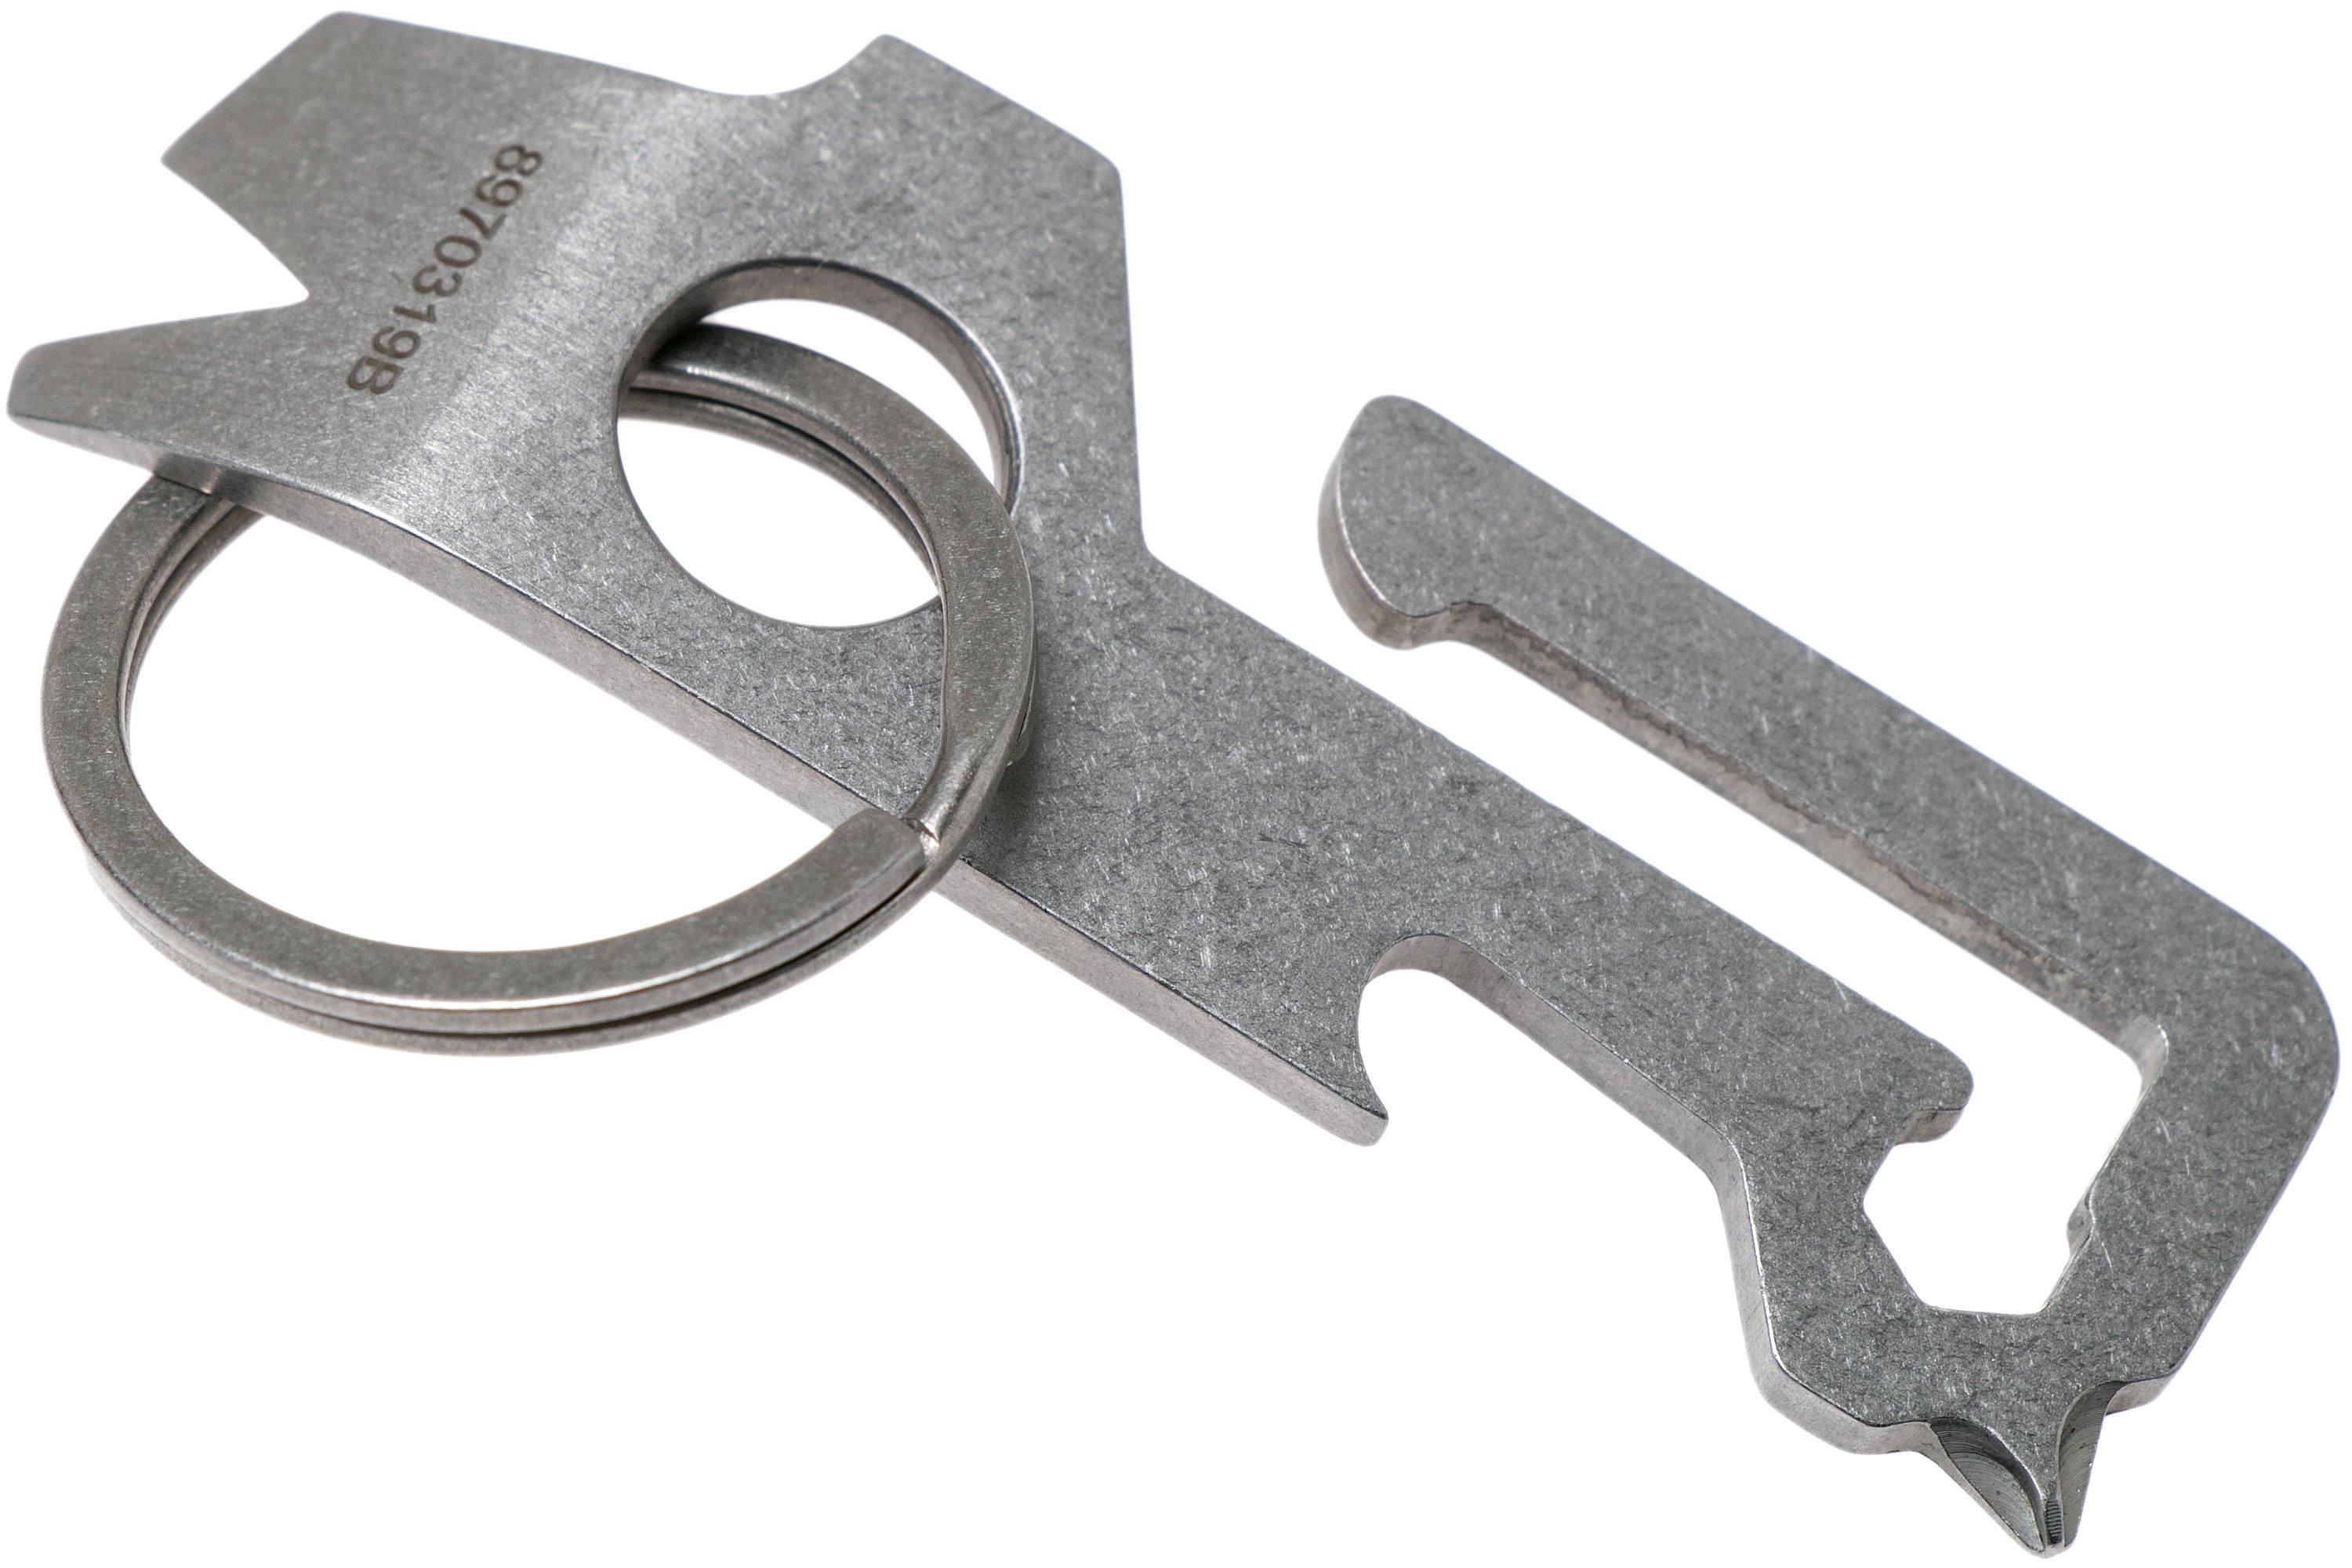 Multi Tool Stainless Steel Stonewash Gerber Mullet Keychain Tool